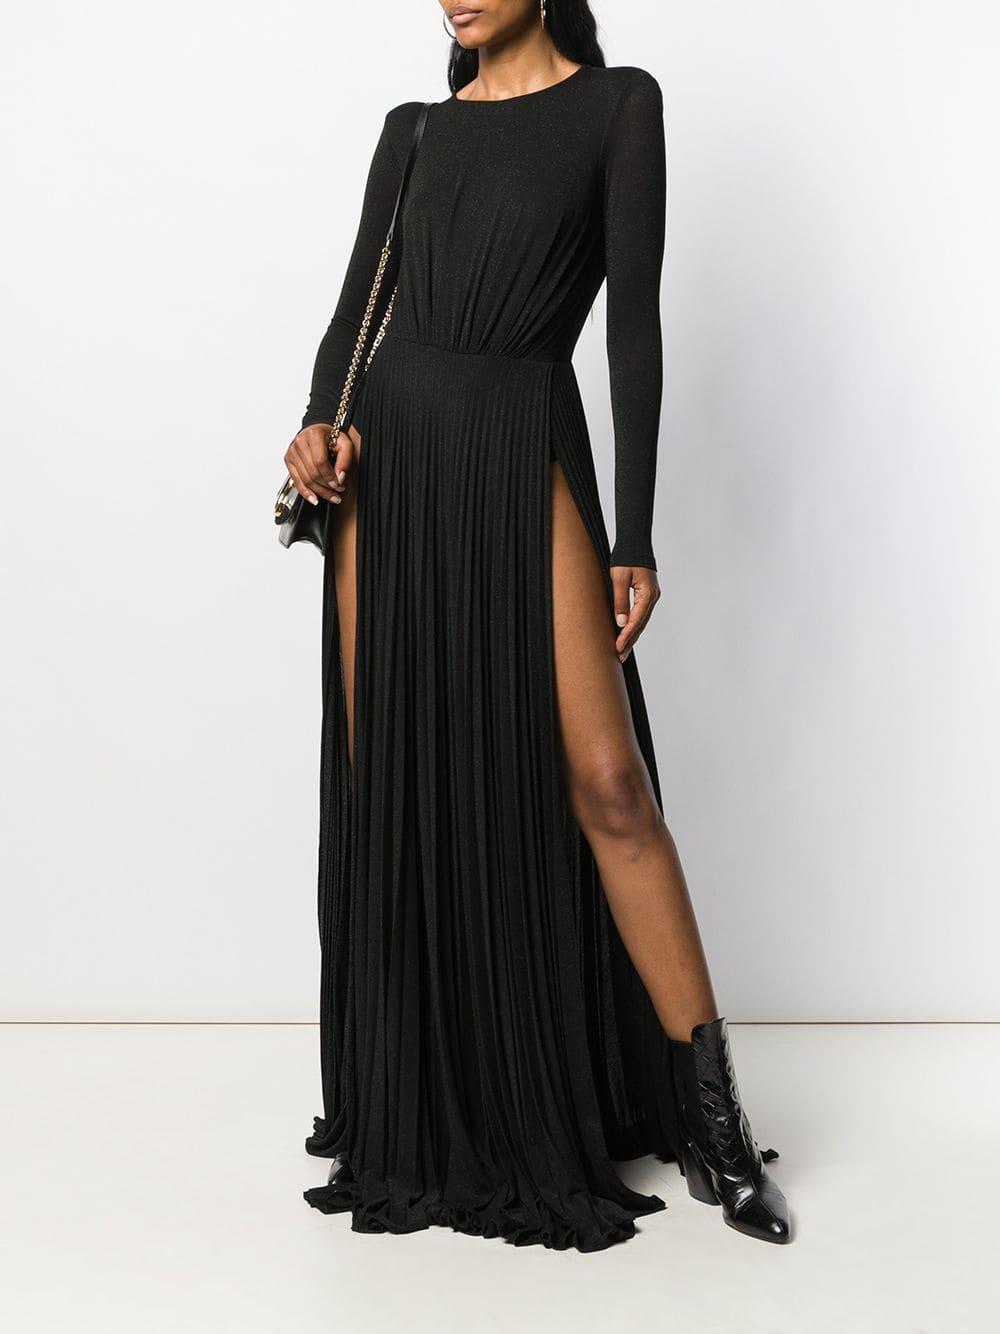 Elisabetta Franchi Synthetic Side Slit Dress in Black - Lyst